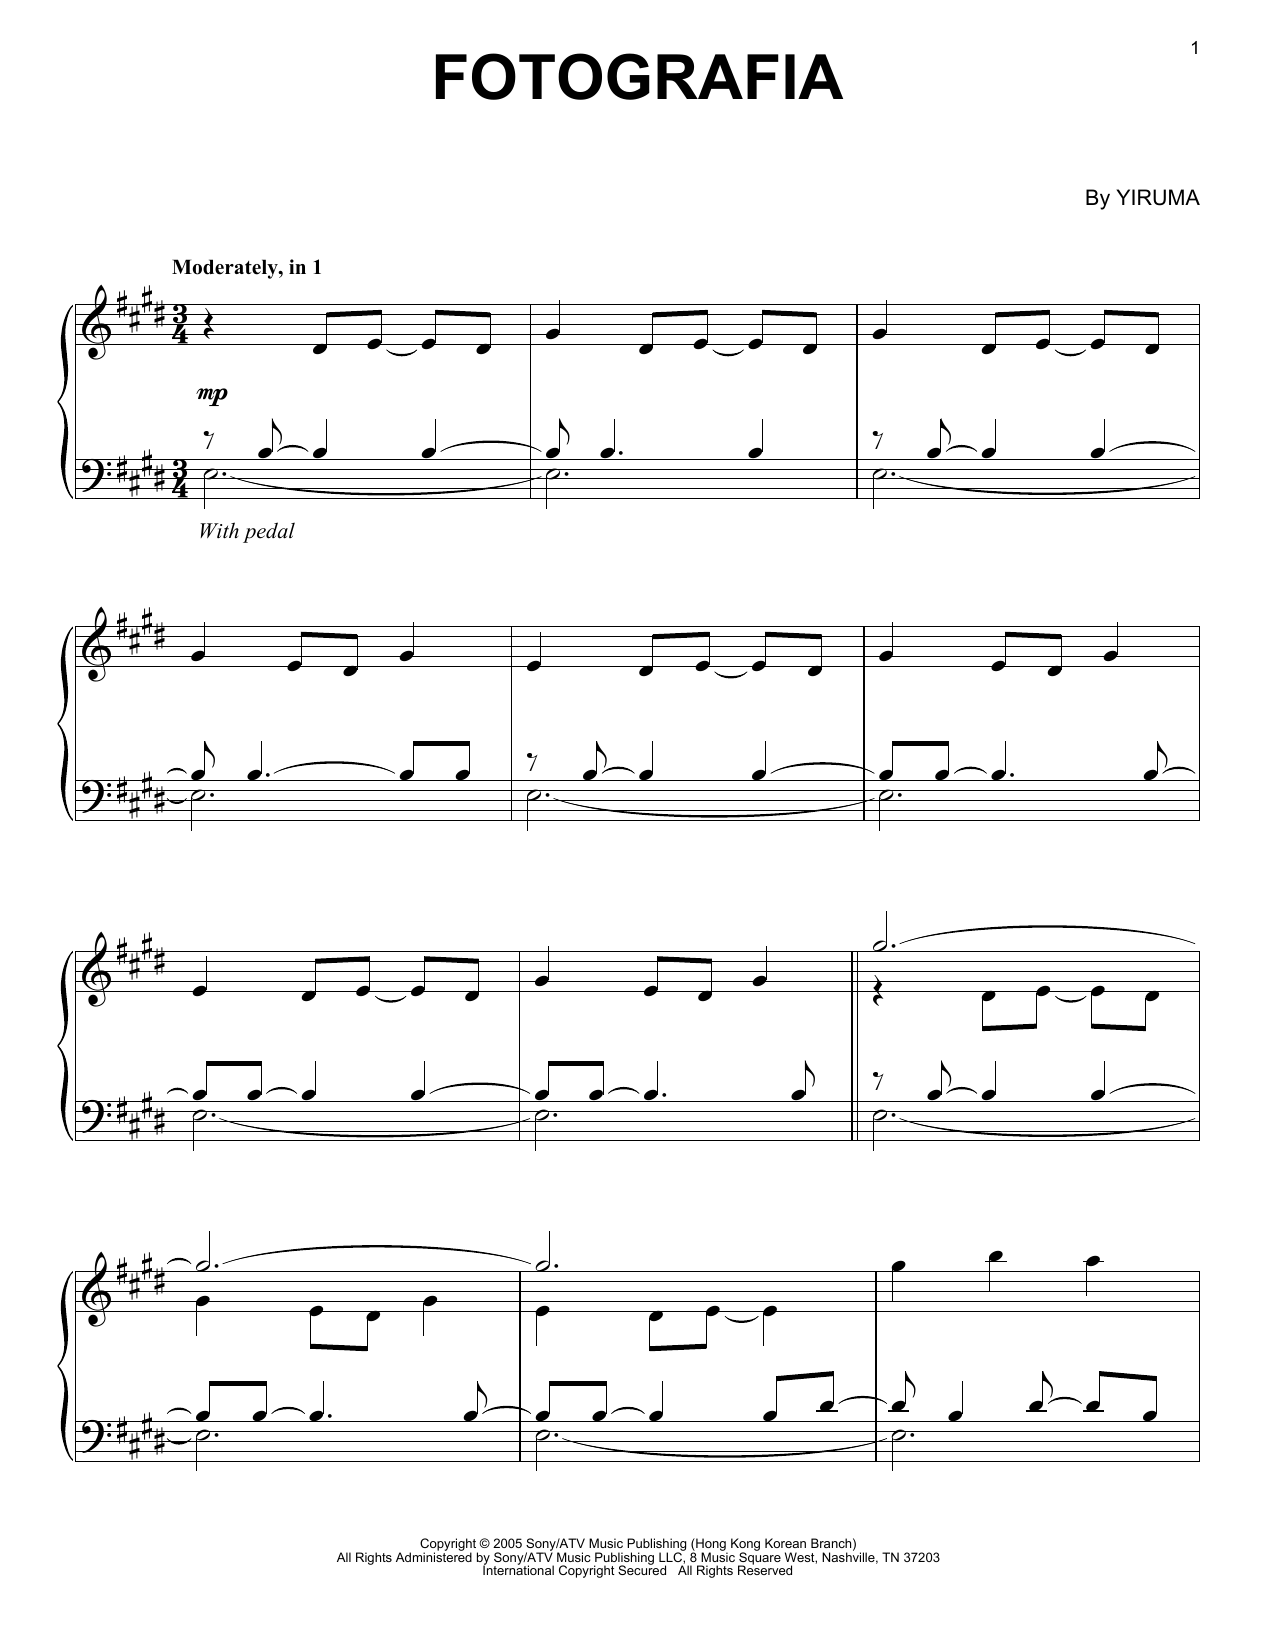 Yiruma Fotografia Sheet Music Notes & Chords for Easy Piano - Download or Print PDF